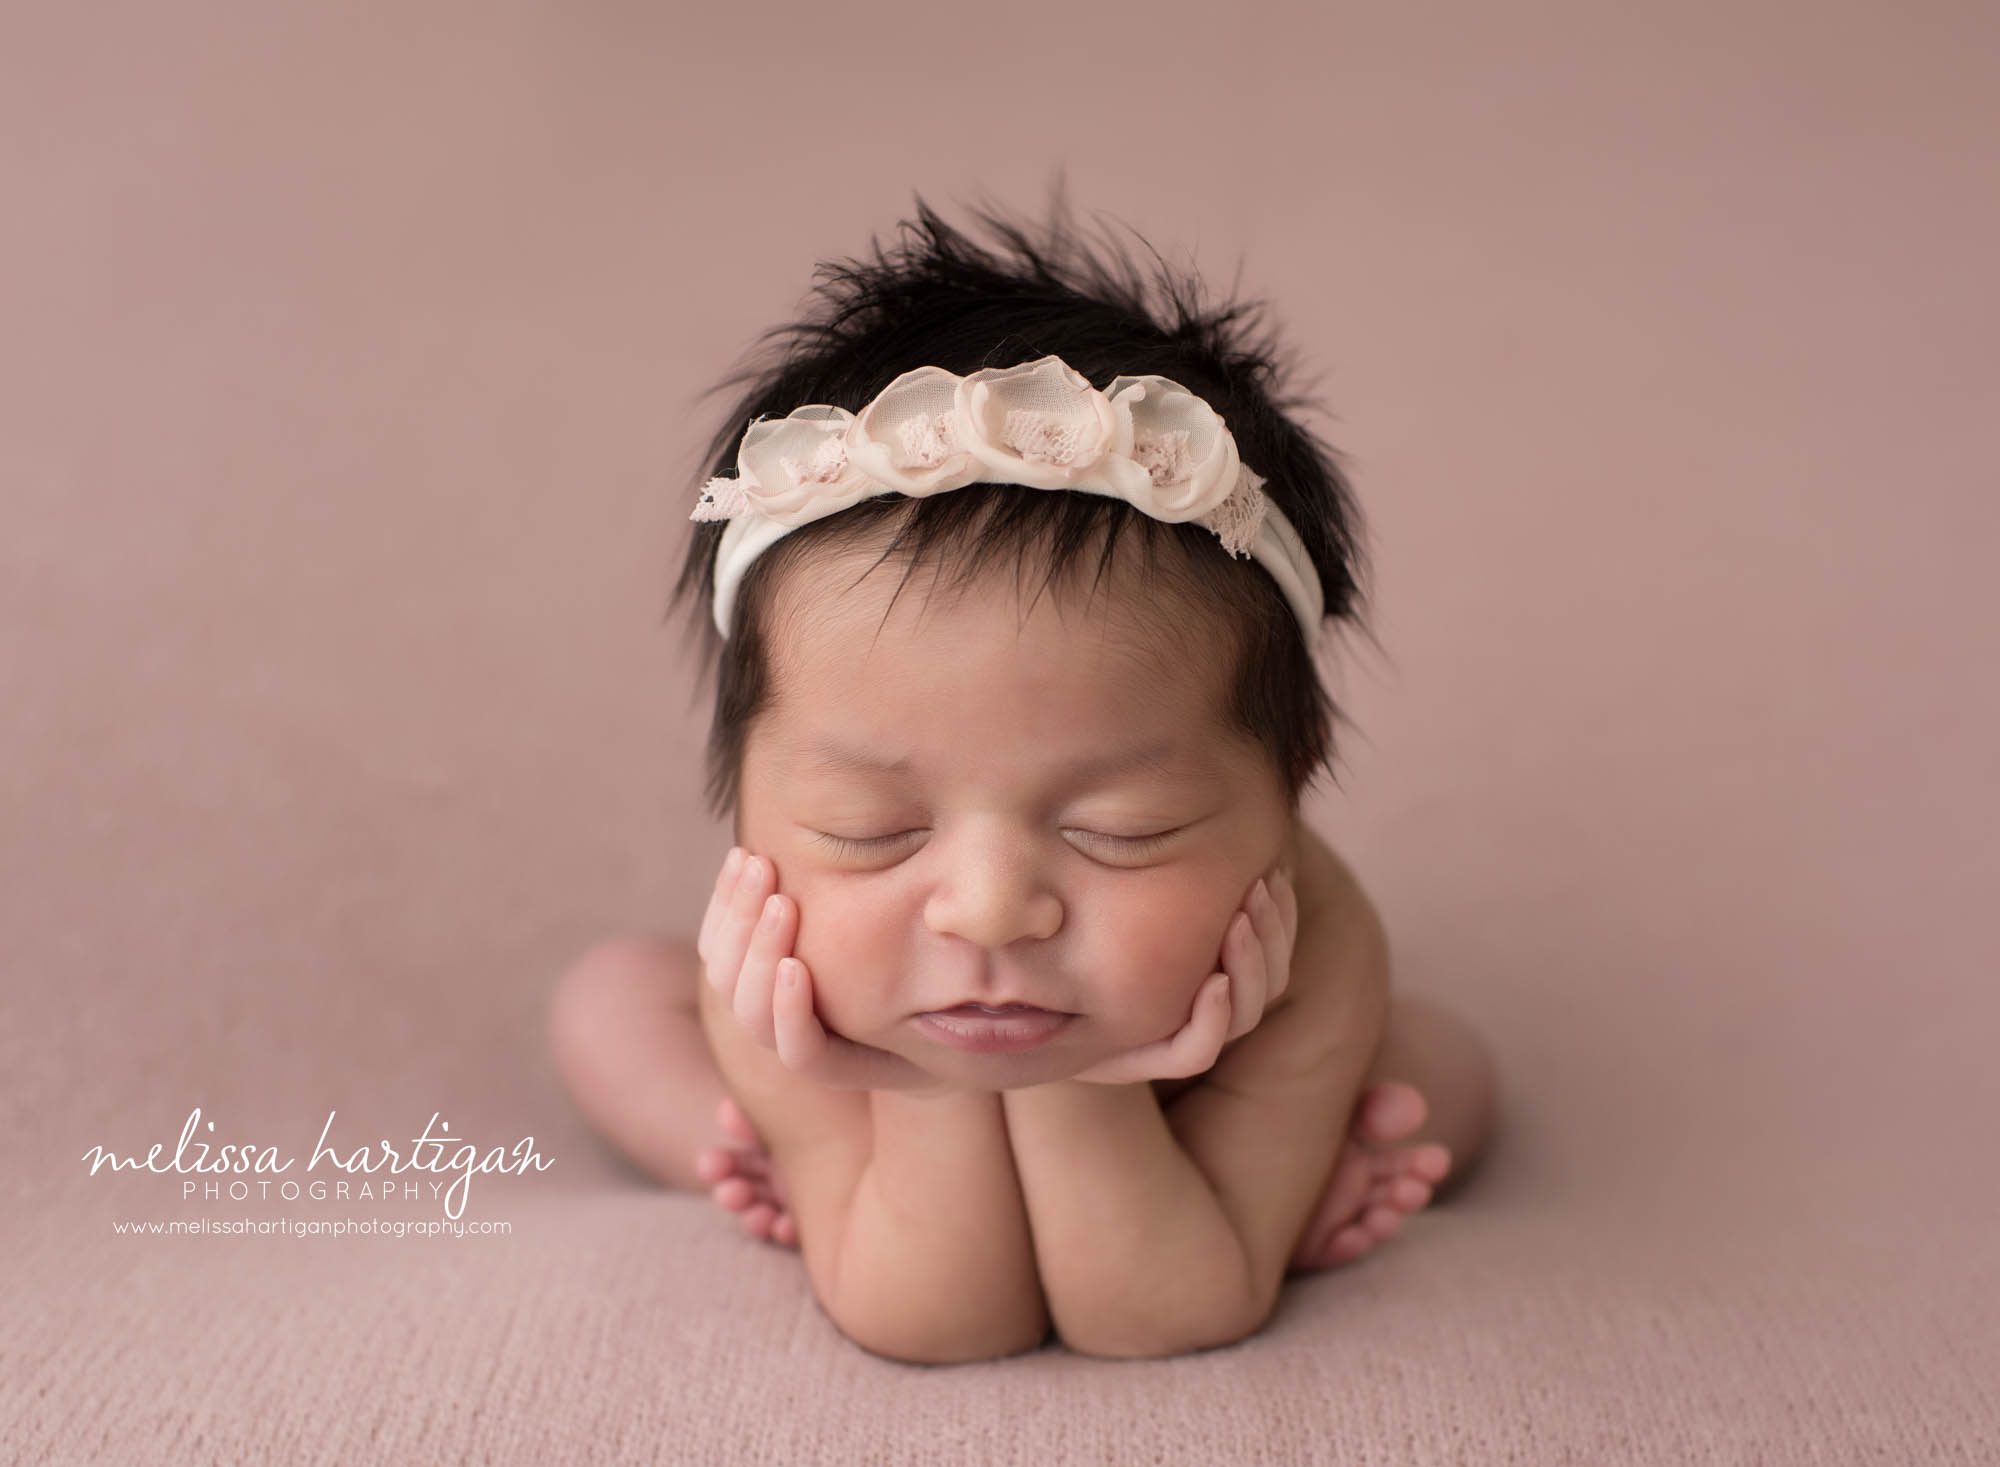 newborn baby girl posed froggy pose on pink backdrop wearing floral headband windsor locks newborn photography